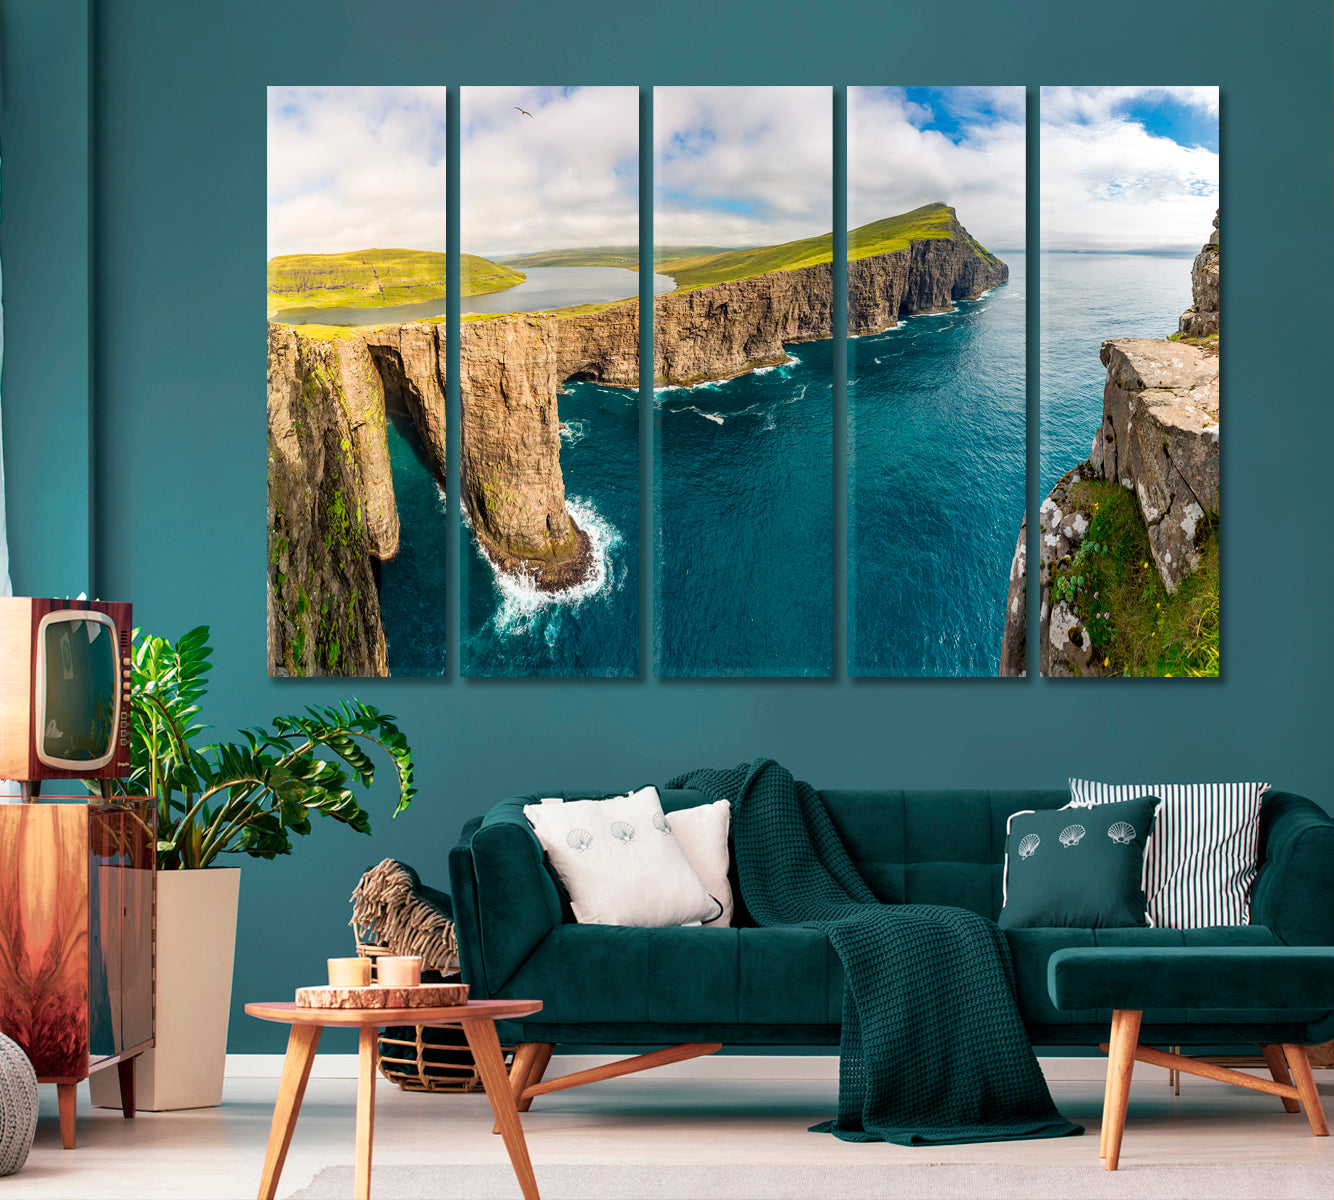 Leitisvatn Or Sorvagsvatn Lake Over the Ocean Faroe Islands Canvas Print-Canvas Print-CetArt-1 Panel-24x16 inches-CetArt